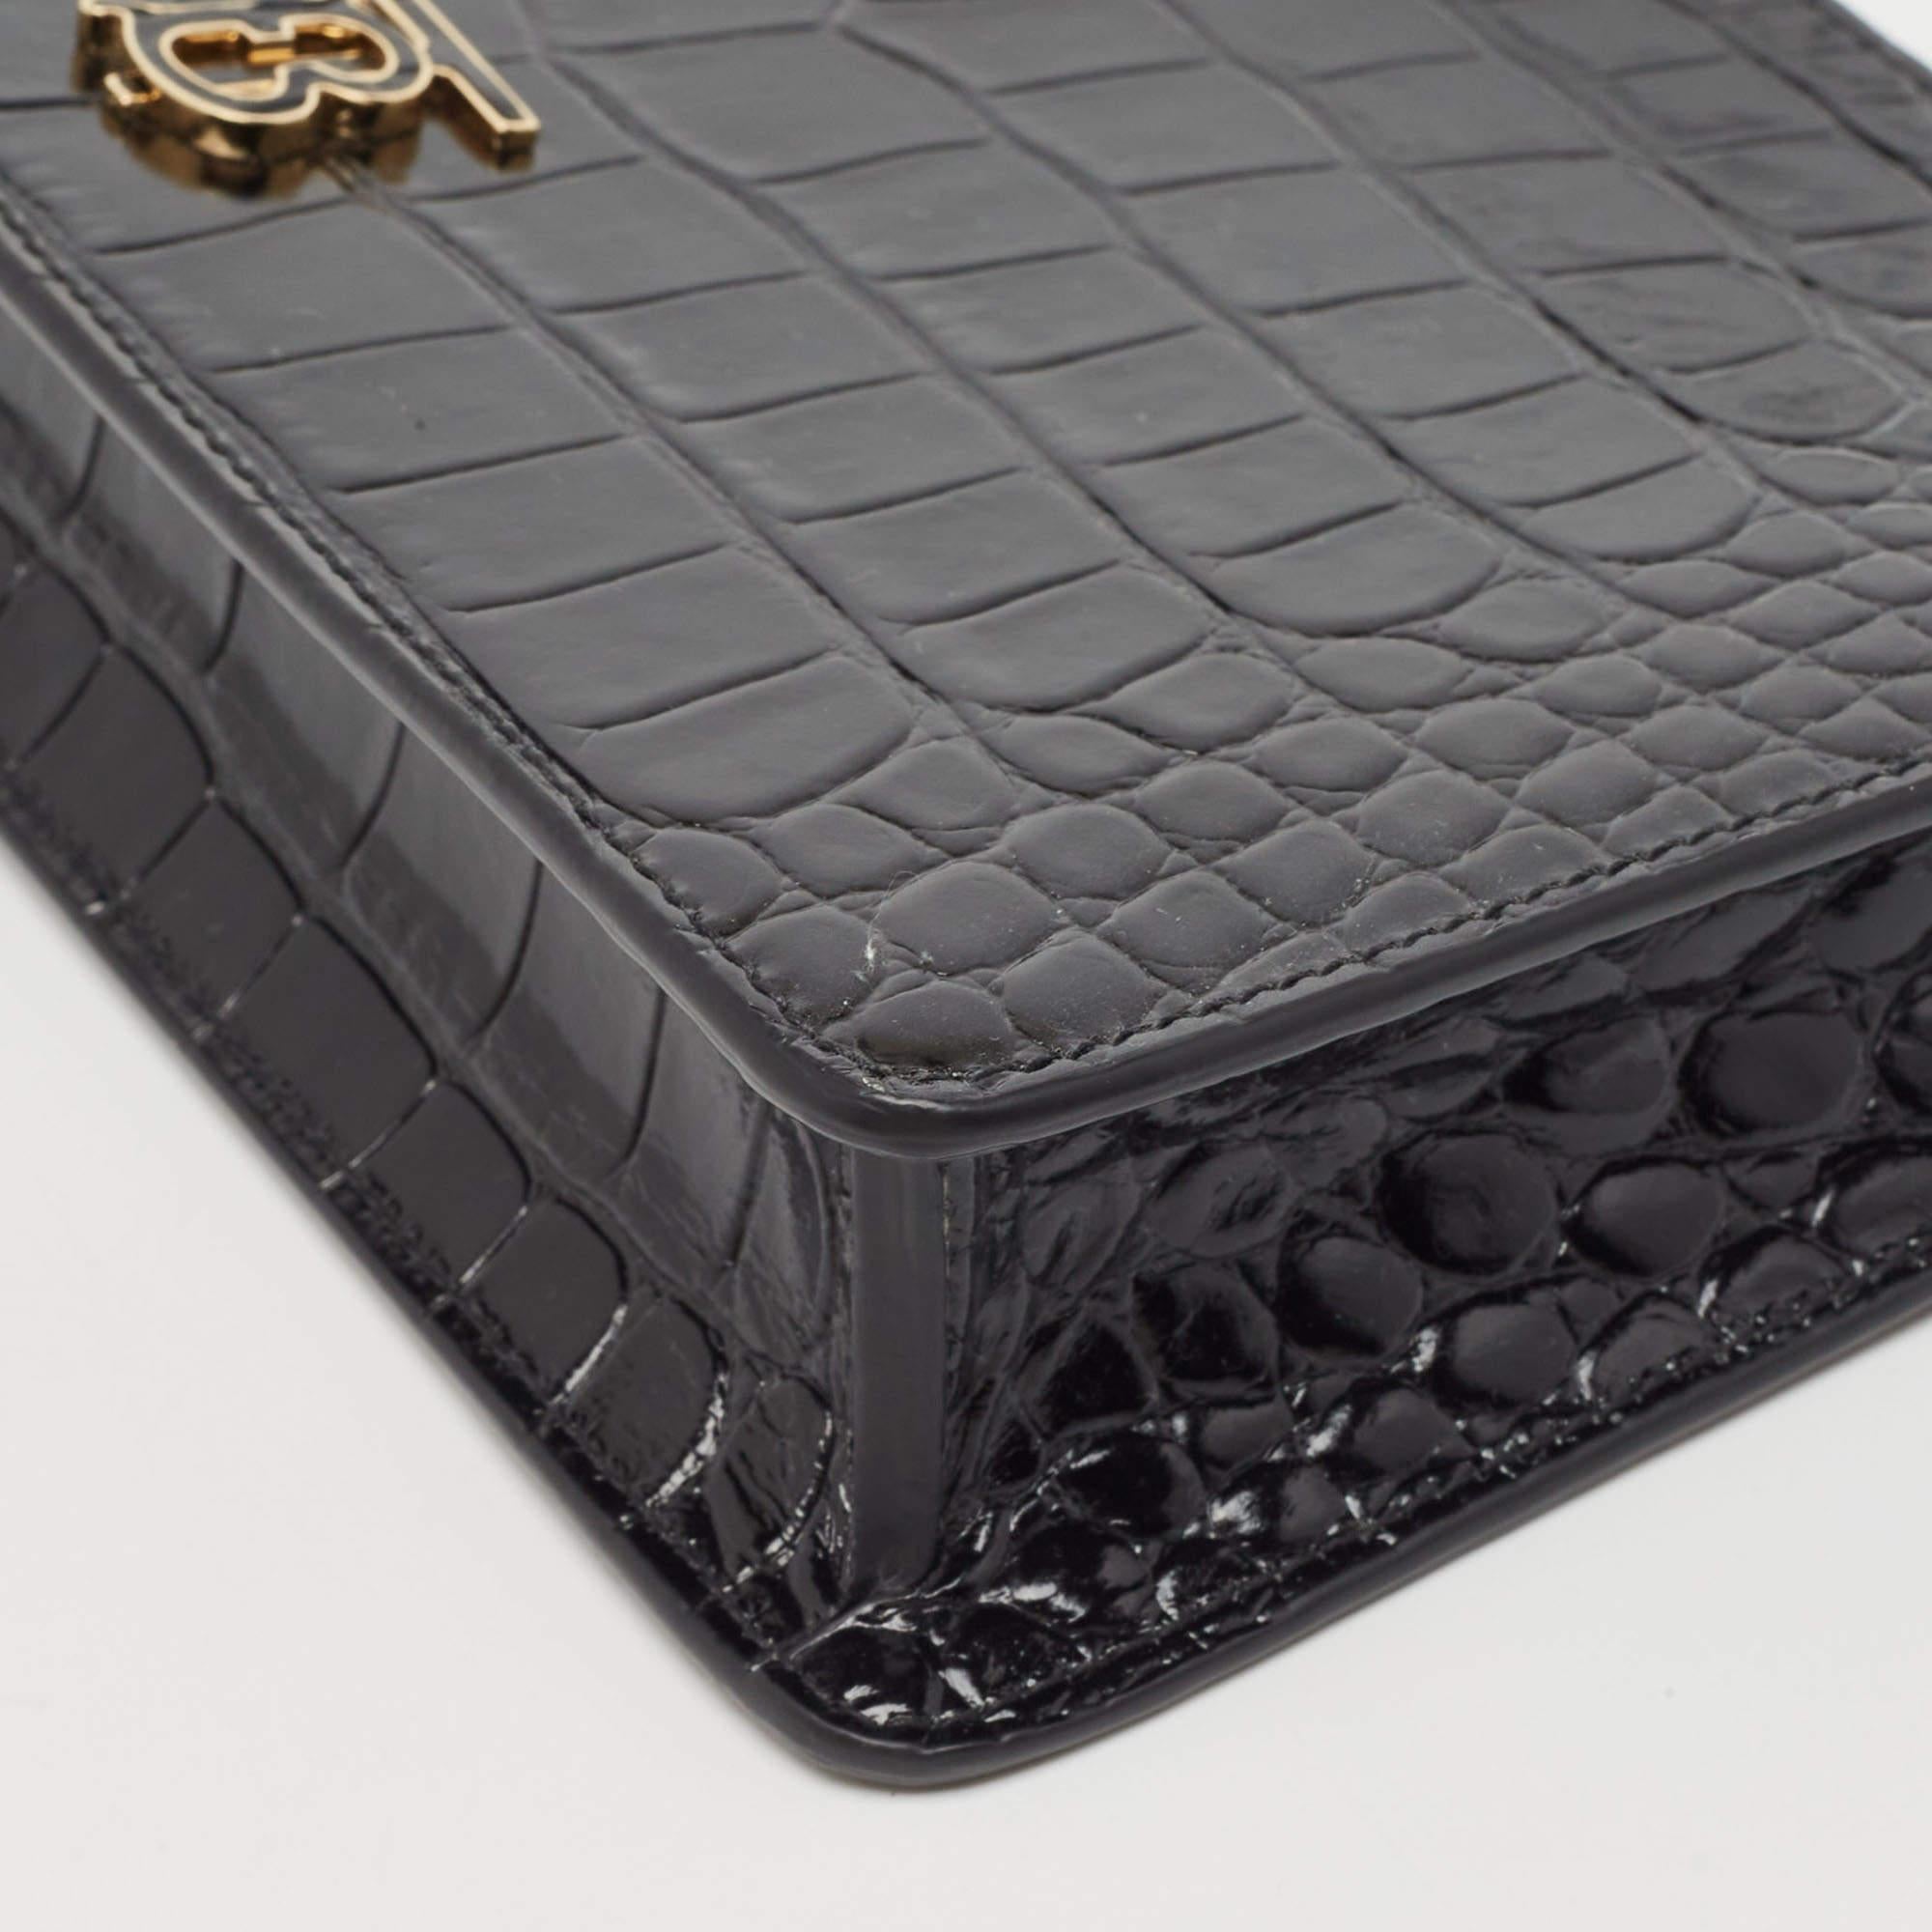 Burberry Black Croc Embossed Leather Shoulder Bag In Excellent Condition For Sale In Dubai, Al Qouz 2